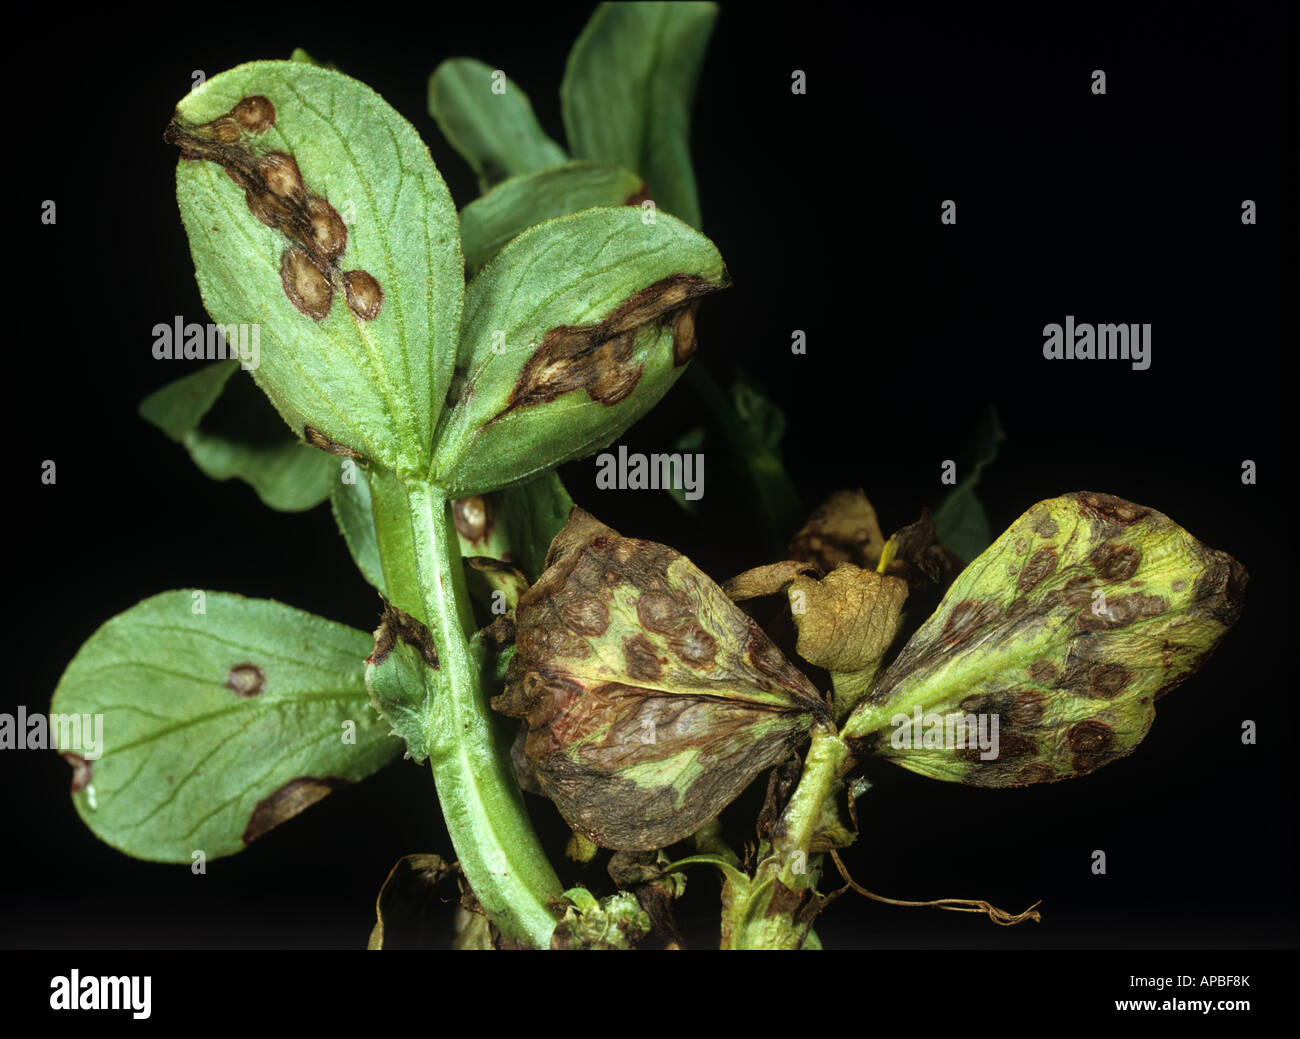 Leaf spot (Ascochyta fabae) lesions field bean leaf Stock Photo